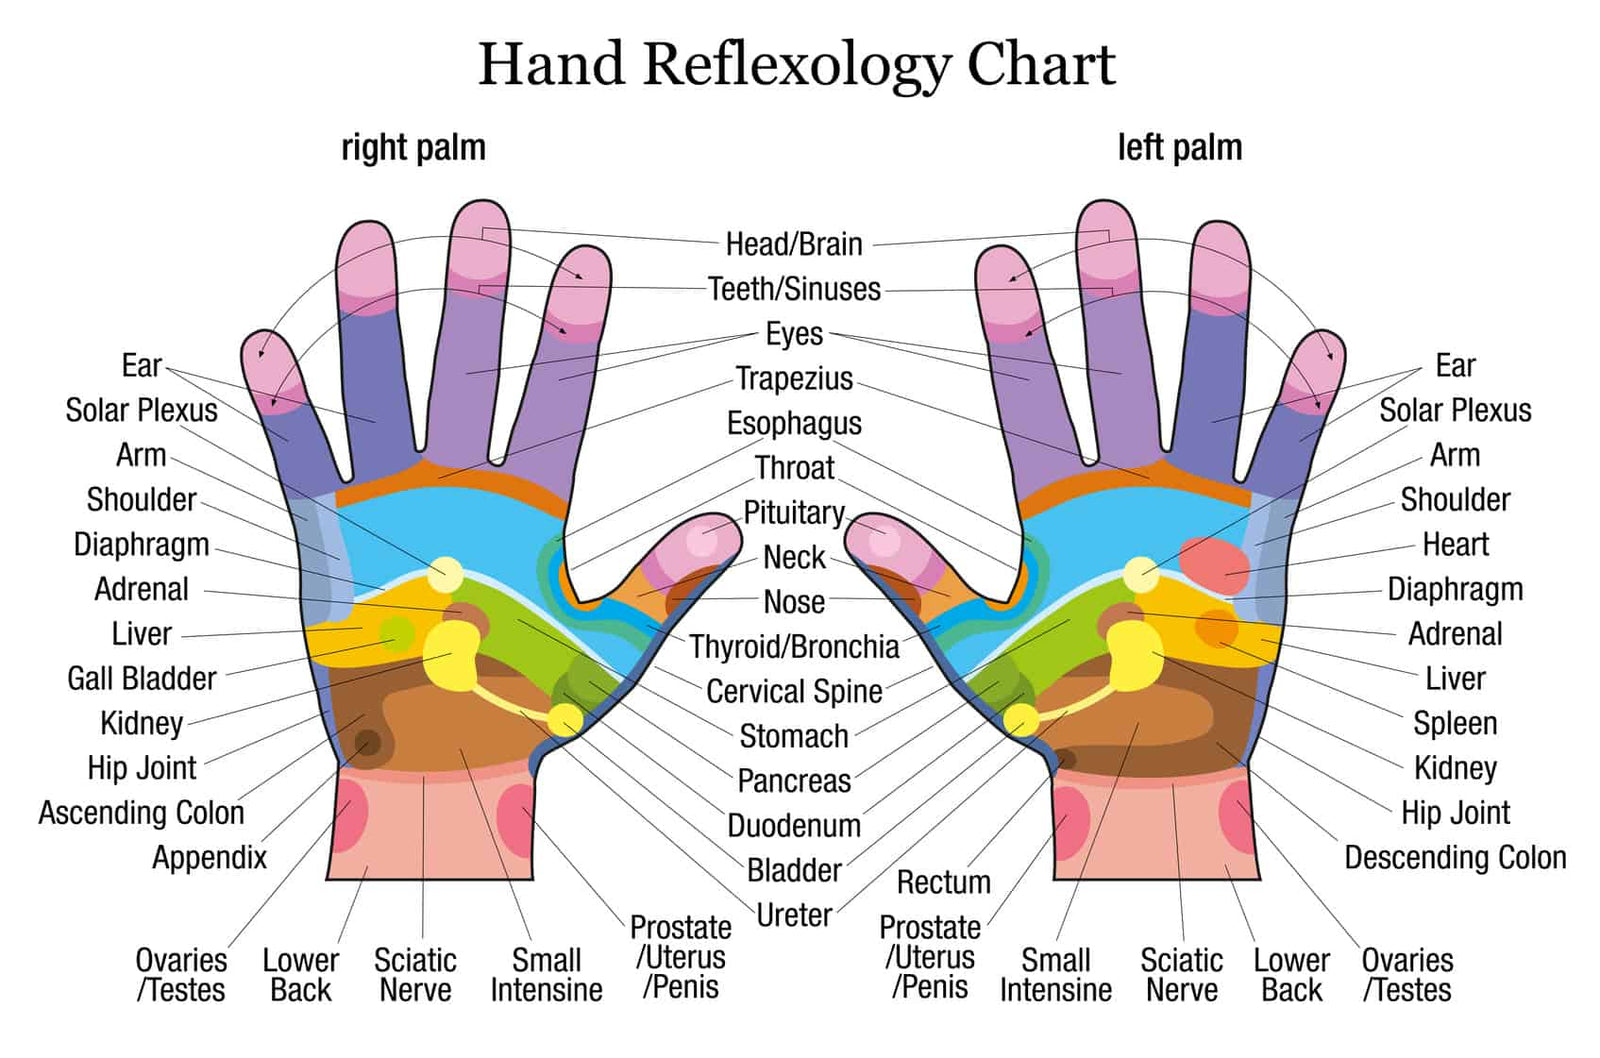 acupressure points, trigger points, reflexology, reflexology chart